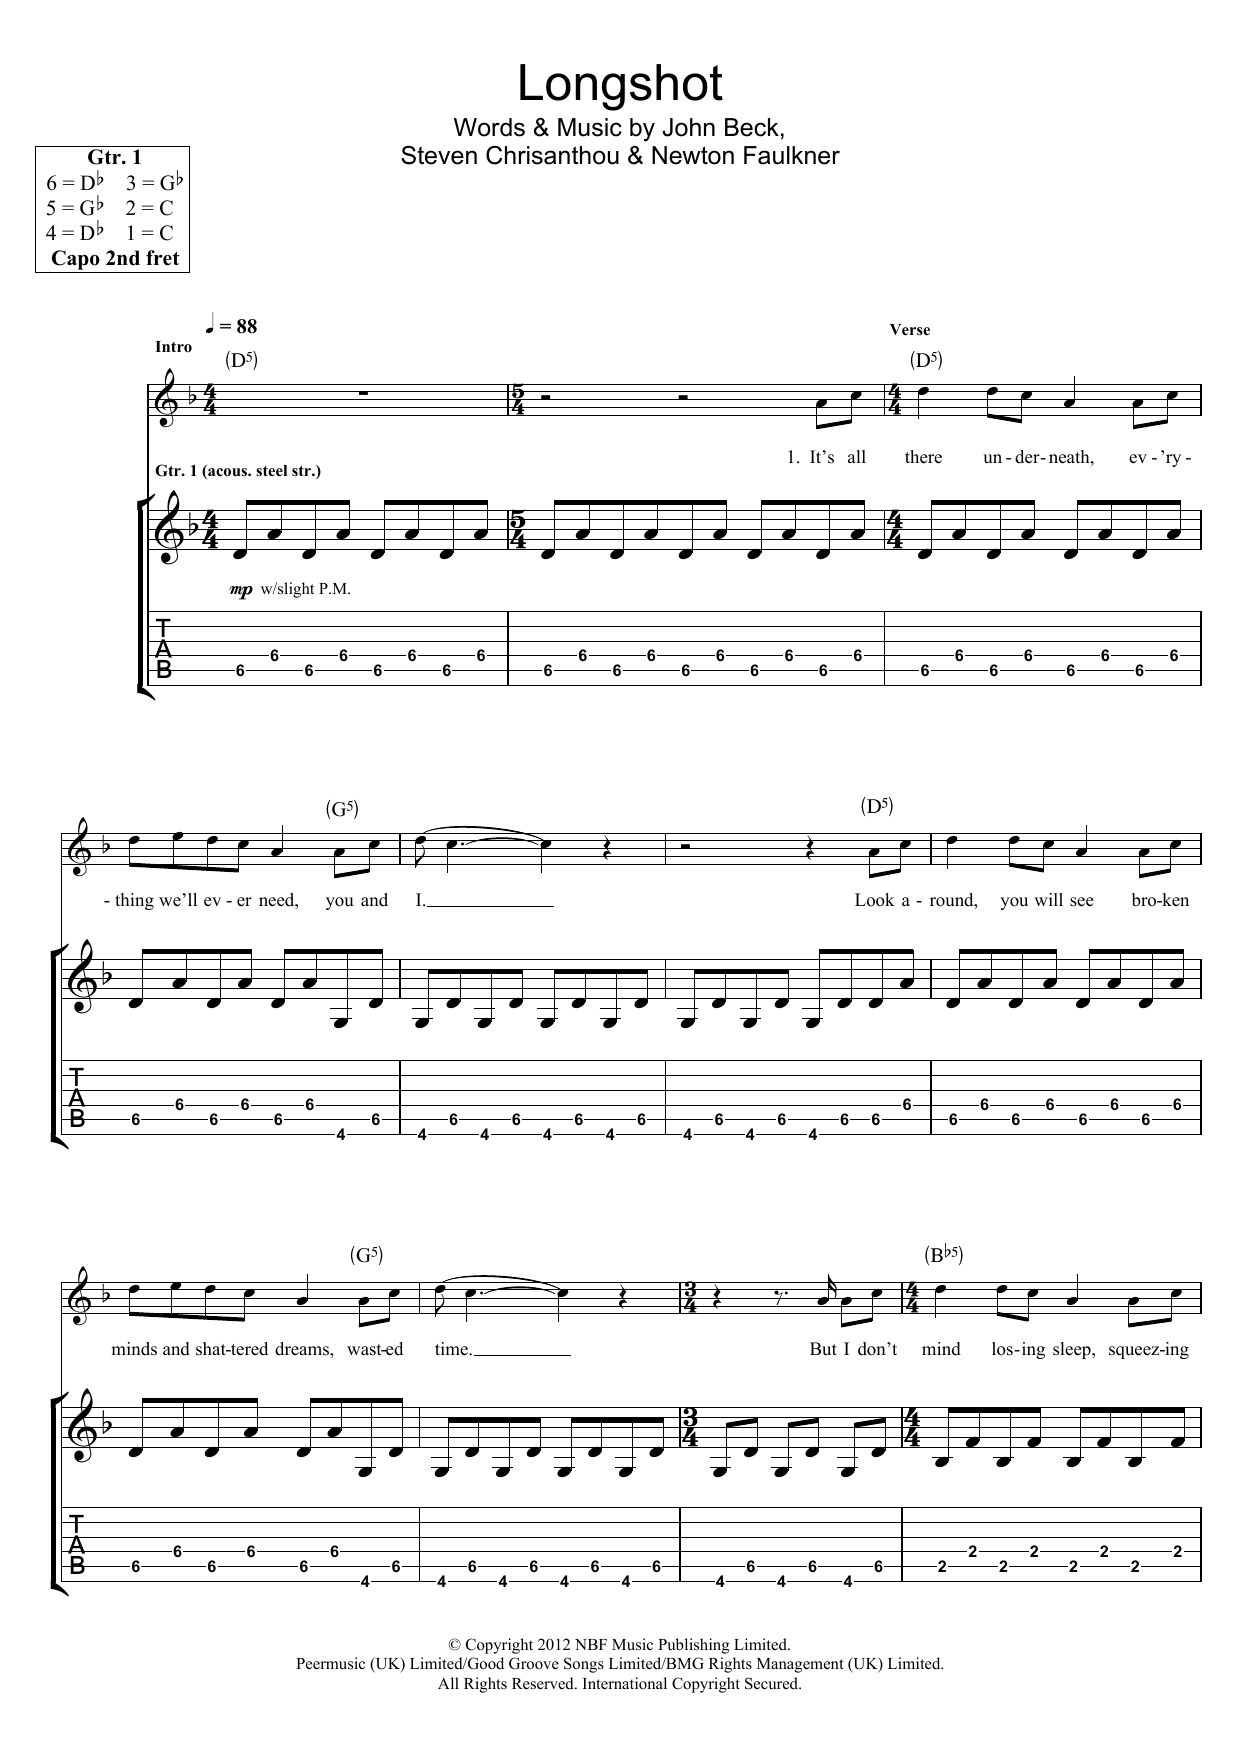 Newton Faulkner Long Shot Sheet Music Notes & Chords for Guitar Tab - Download or Print PDF